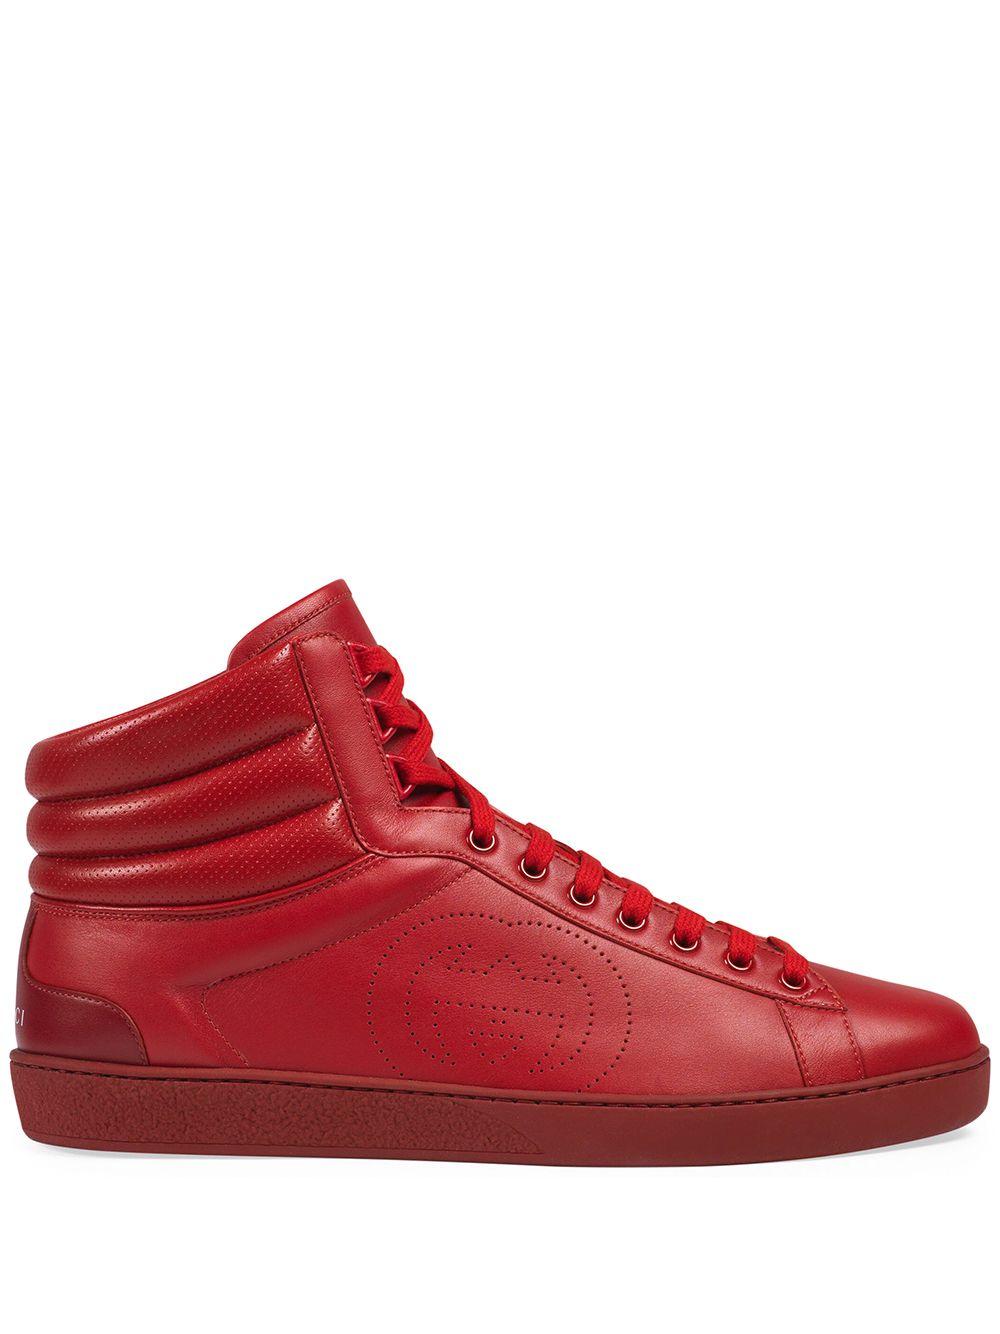 Mexican Handmade Premium Leather Men Sneakers- Moreno Red | CoLores Decor